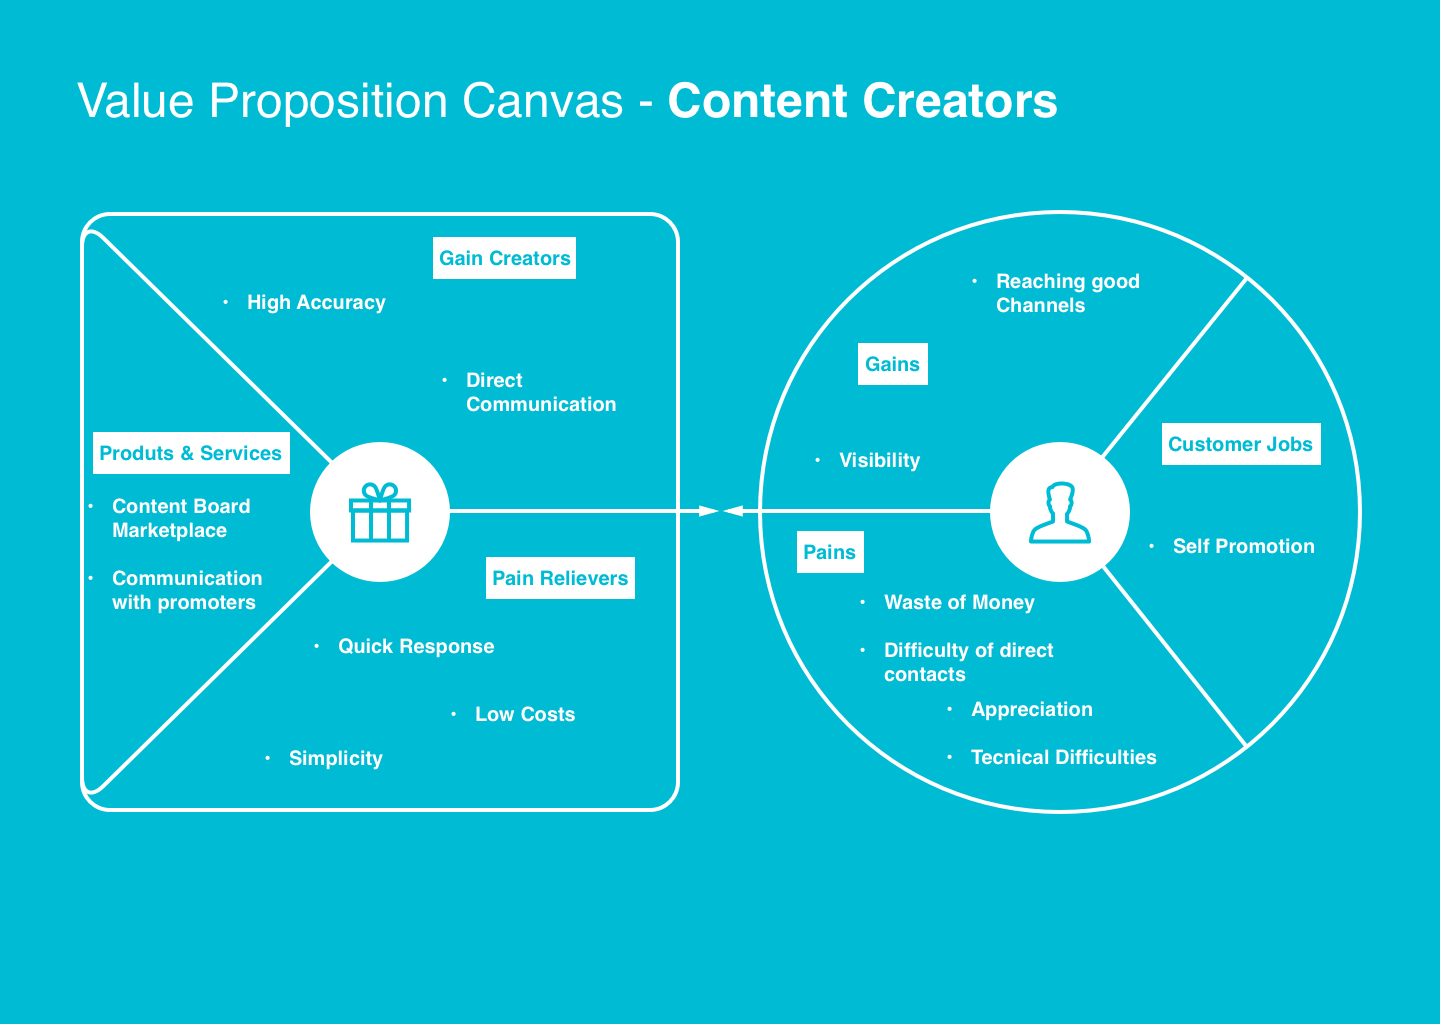 Business Model Canvas - Value proposition for contents creators